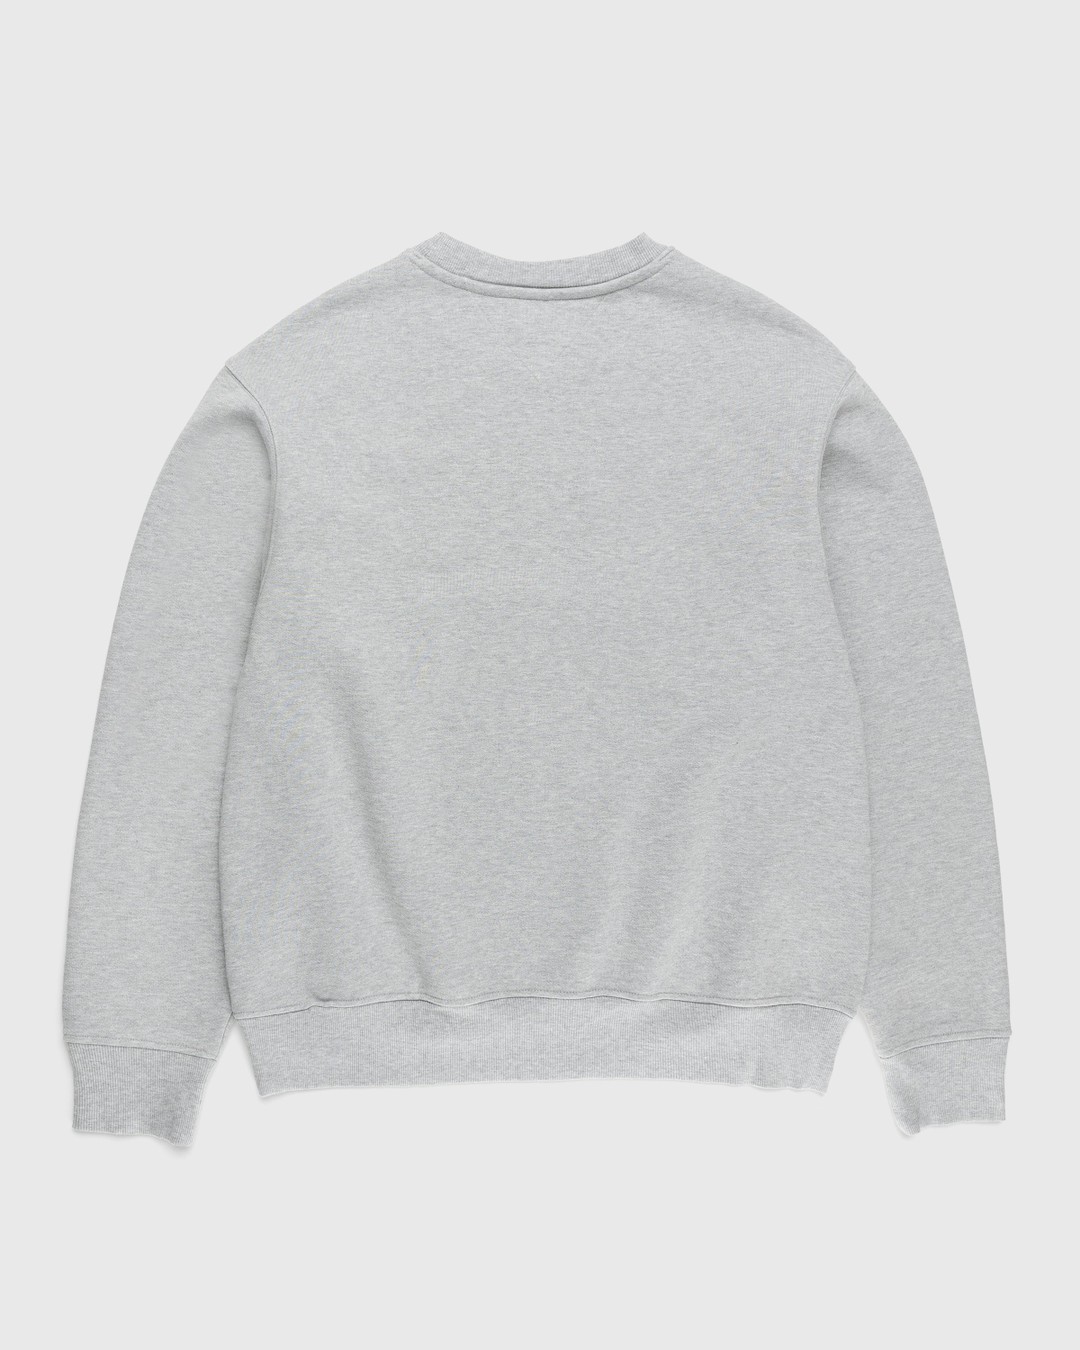 Patta x Tommy Hilfiger – Crewneck Sweatshirt Mid Grey Heather - Sweatshirts - Grey - Image 2